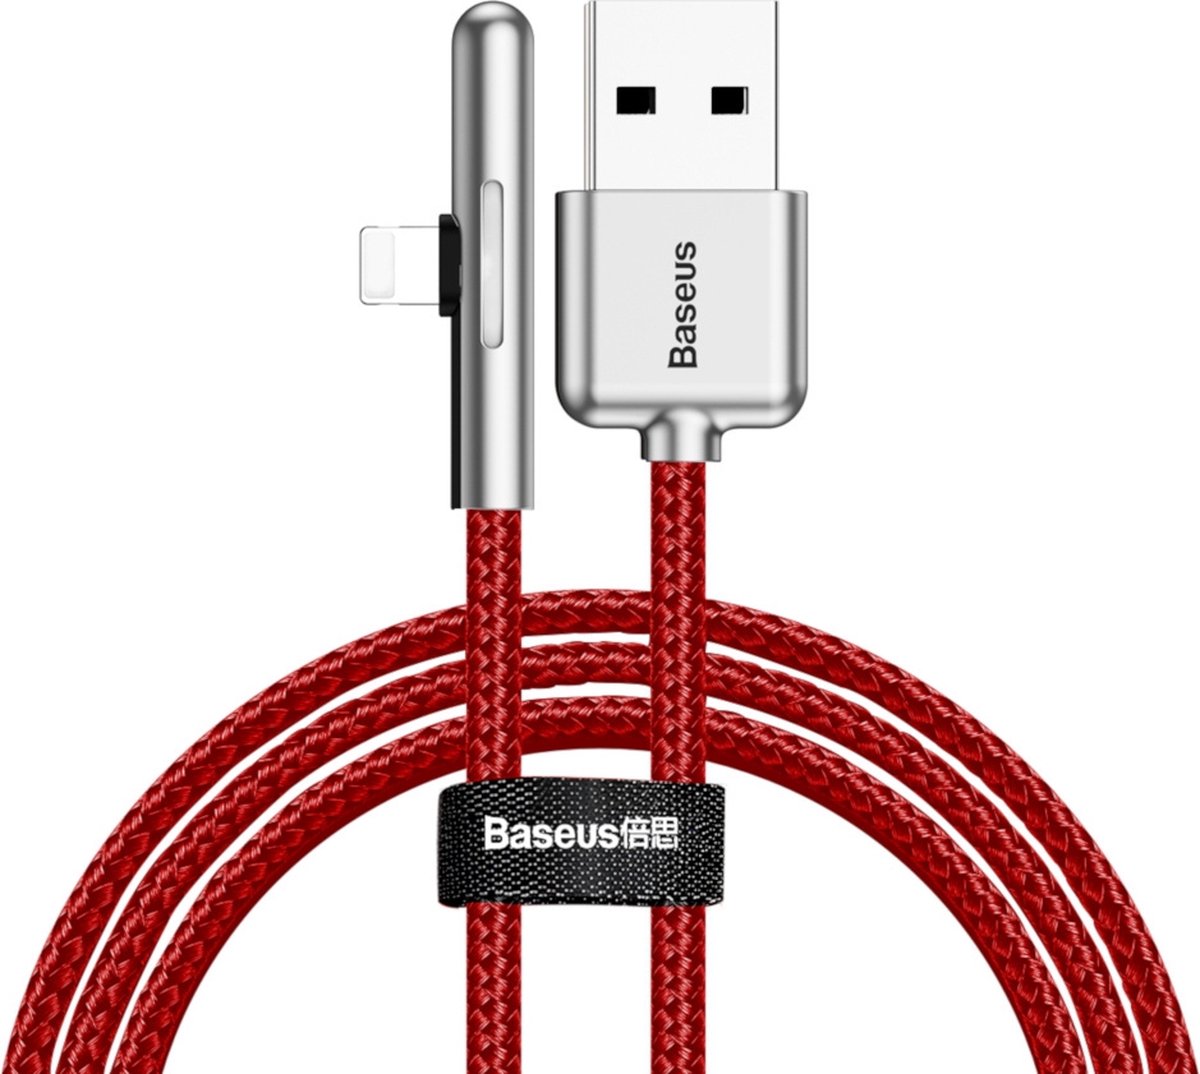 Baseus Game USB Cable Lightning 1 Meter